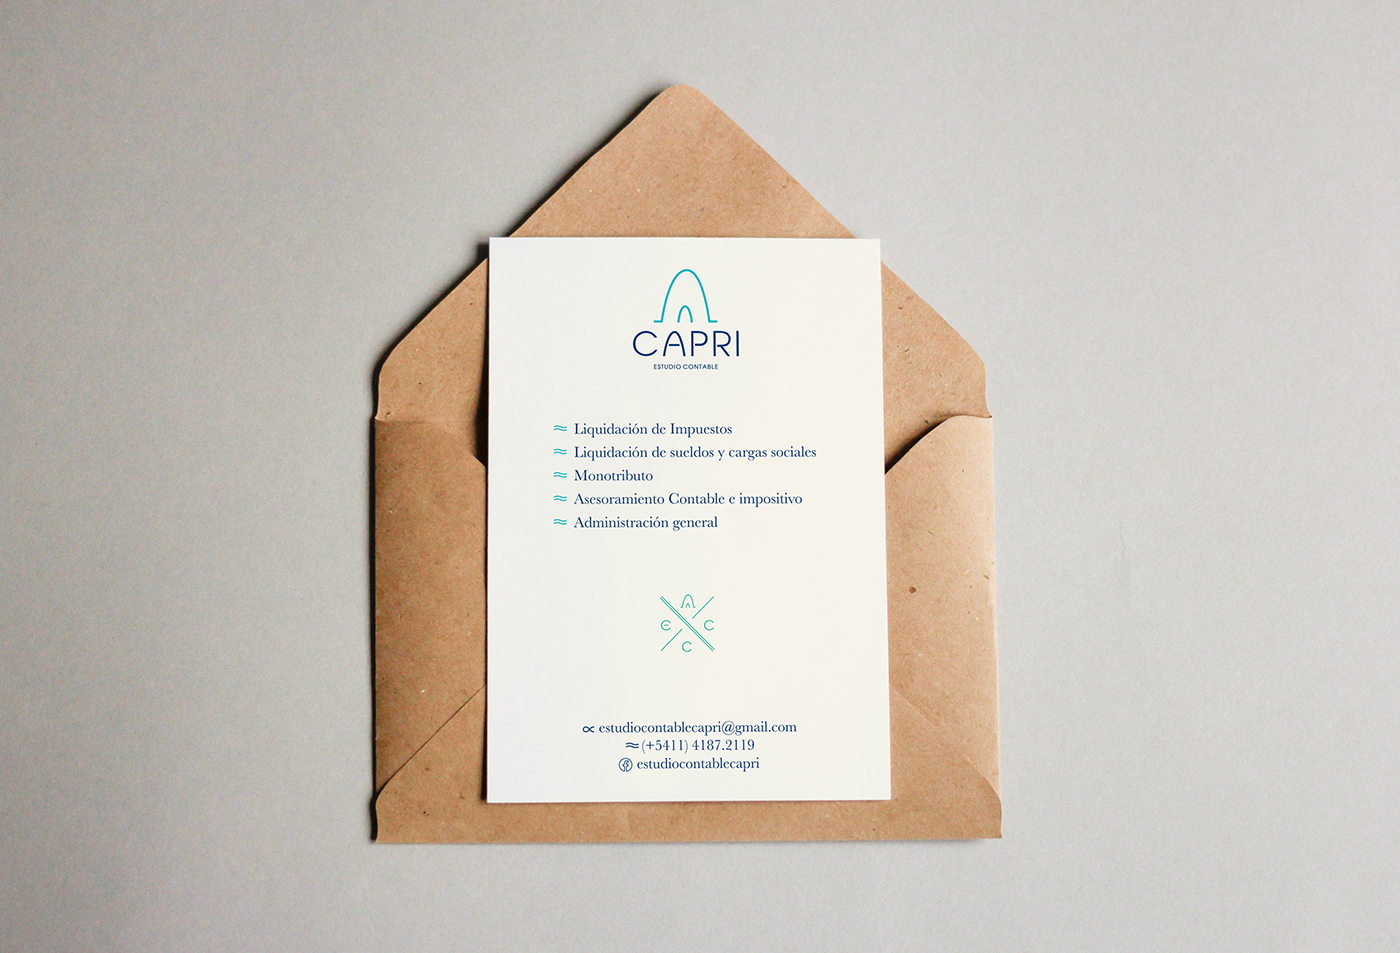 Capri Island accounting studio postacrds logotipe branding  newbrand identity accountancy